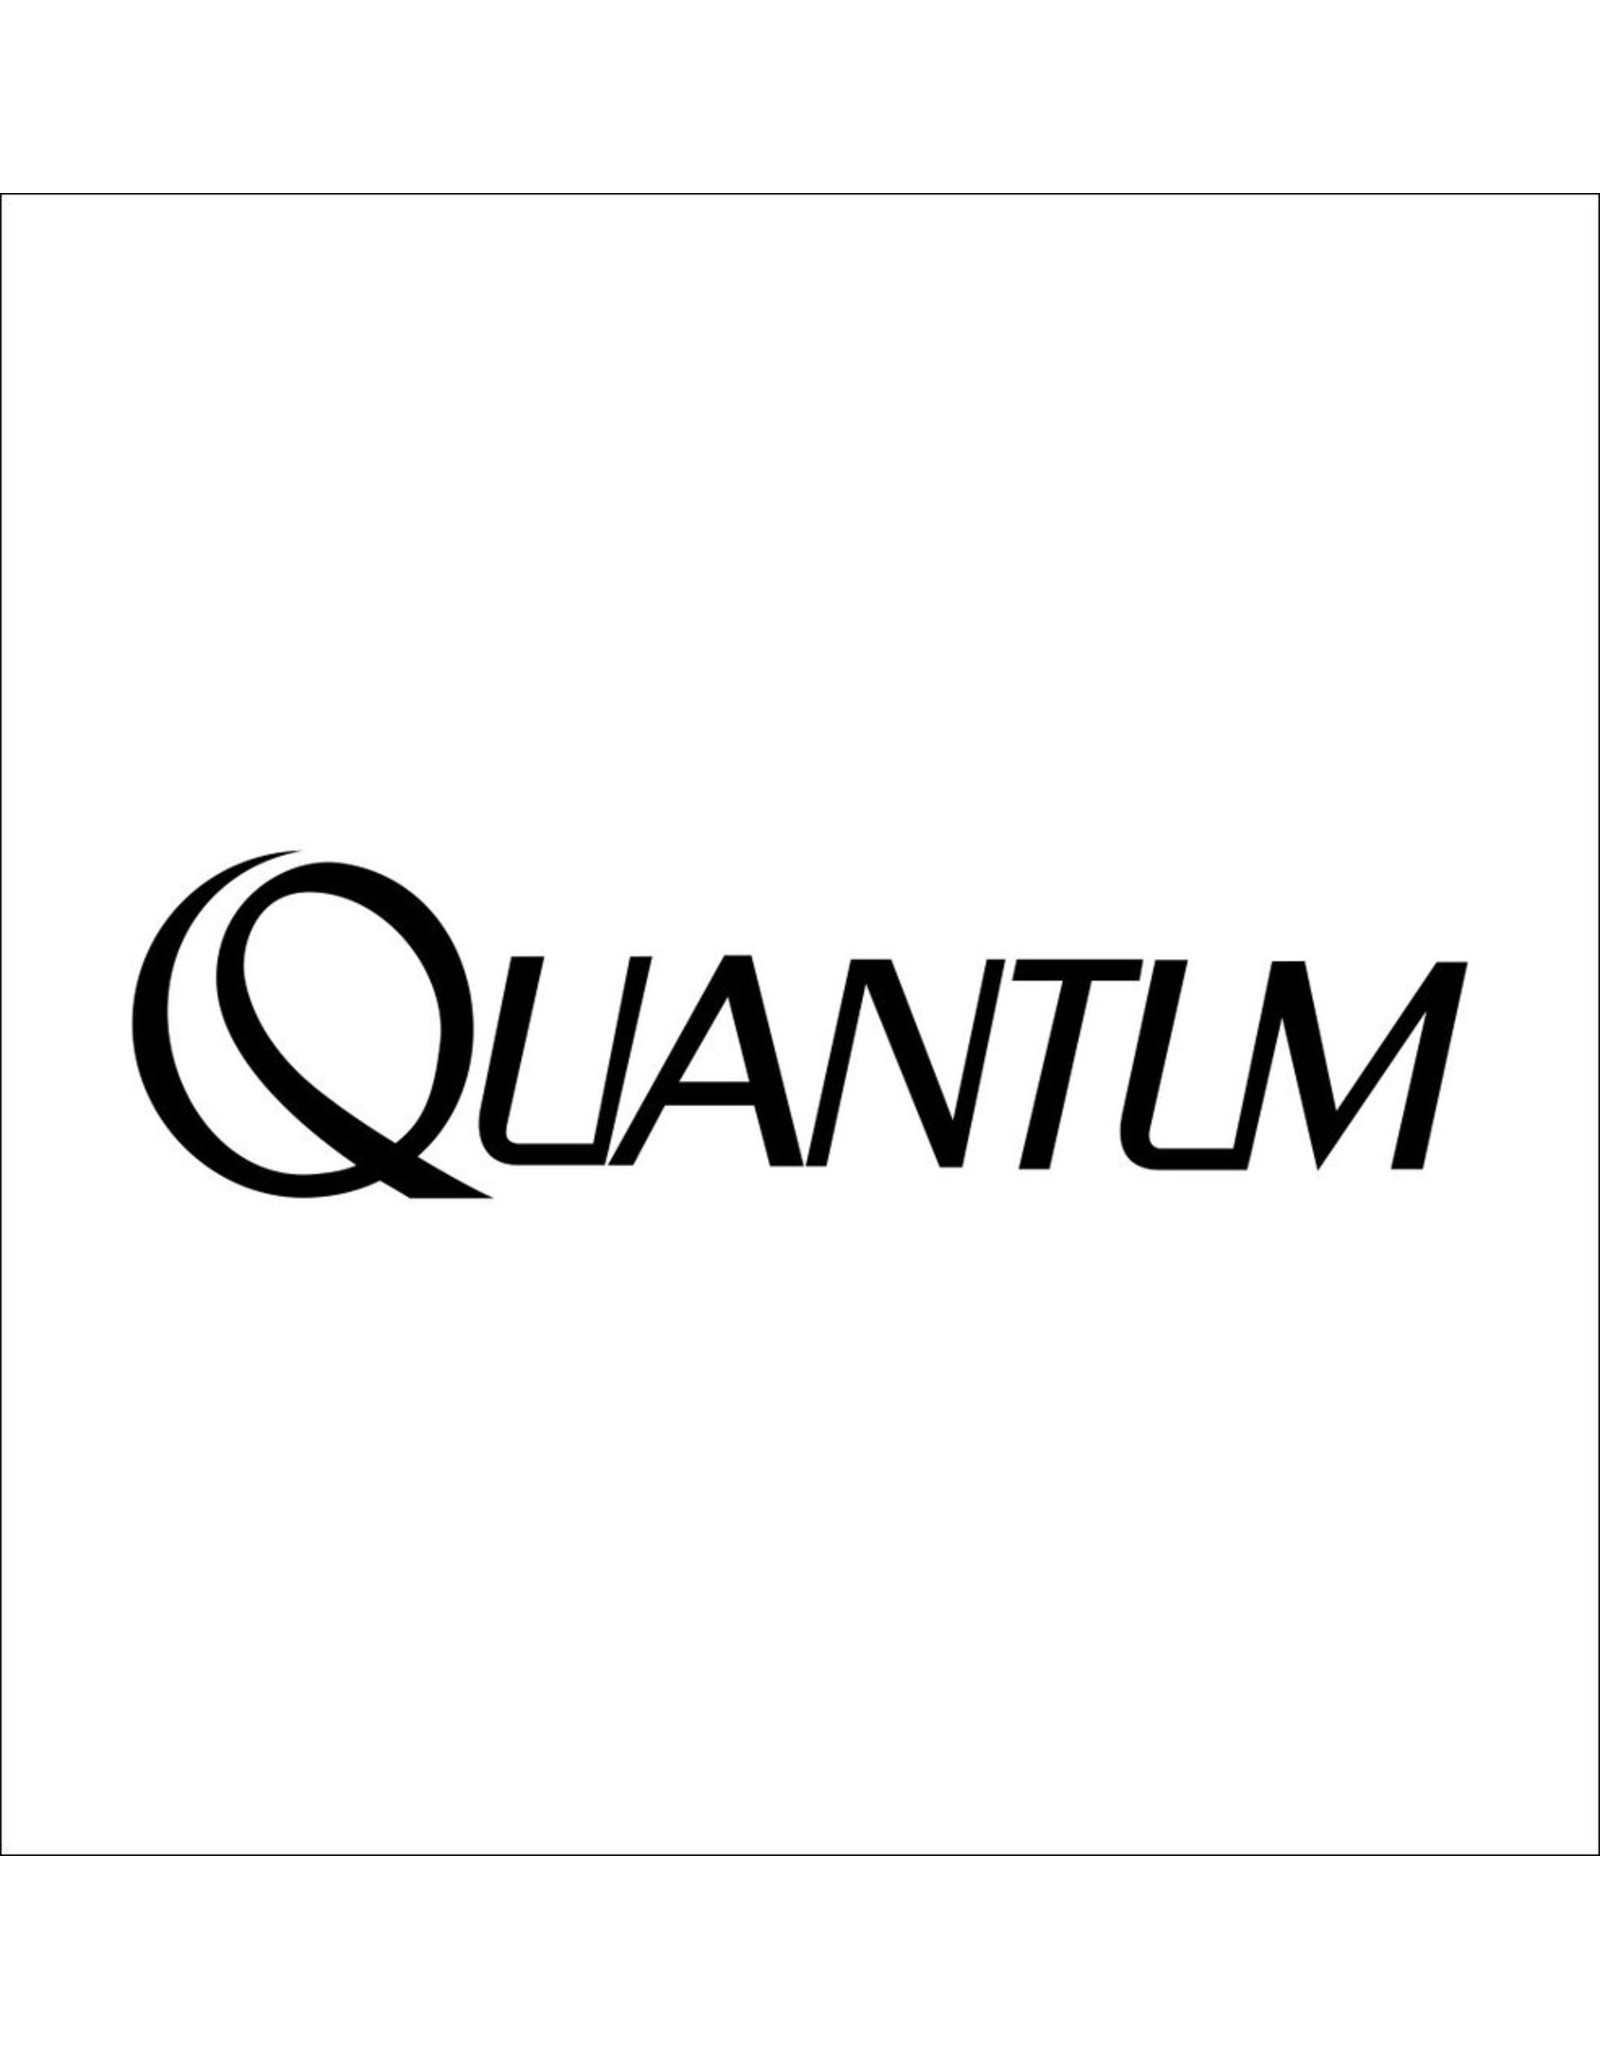 Quantum XX035-01  KICK LEVER GUIDE POST WASHER